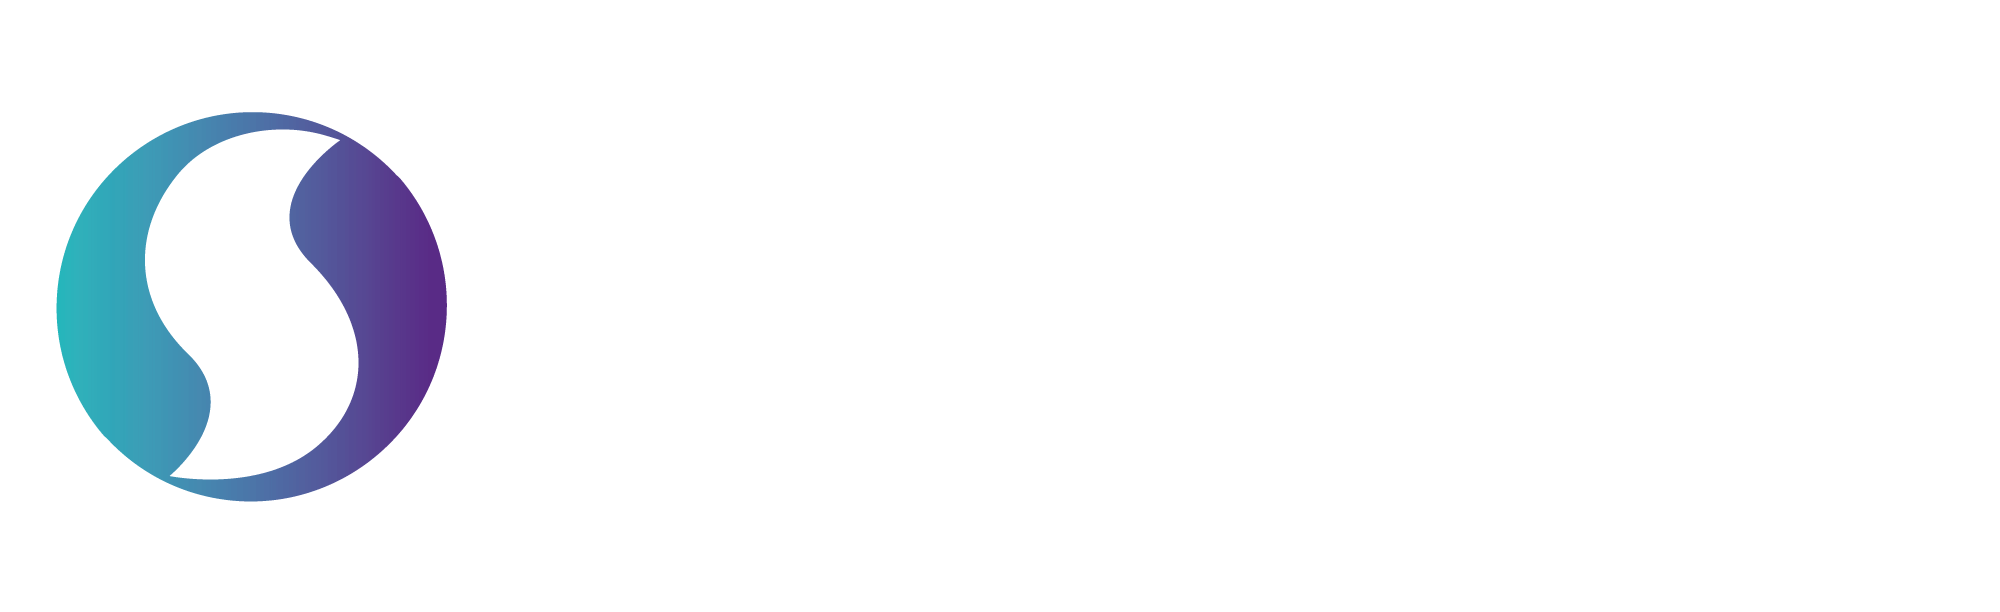 Synergi Finance - The Free Finance Tool